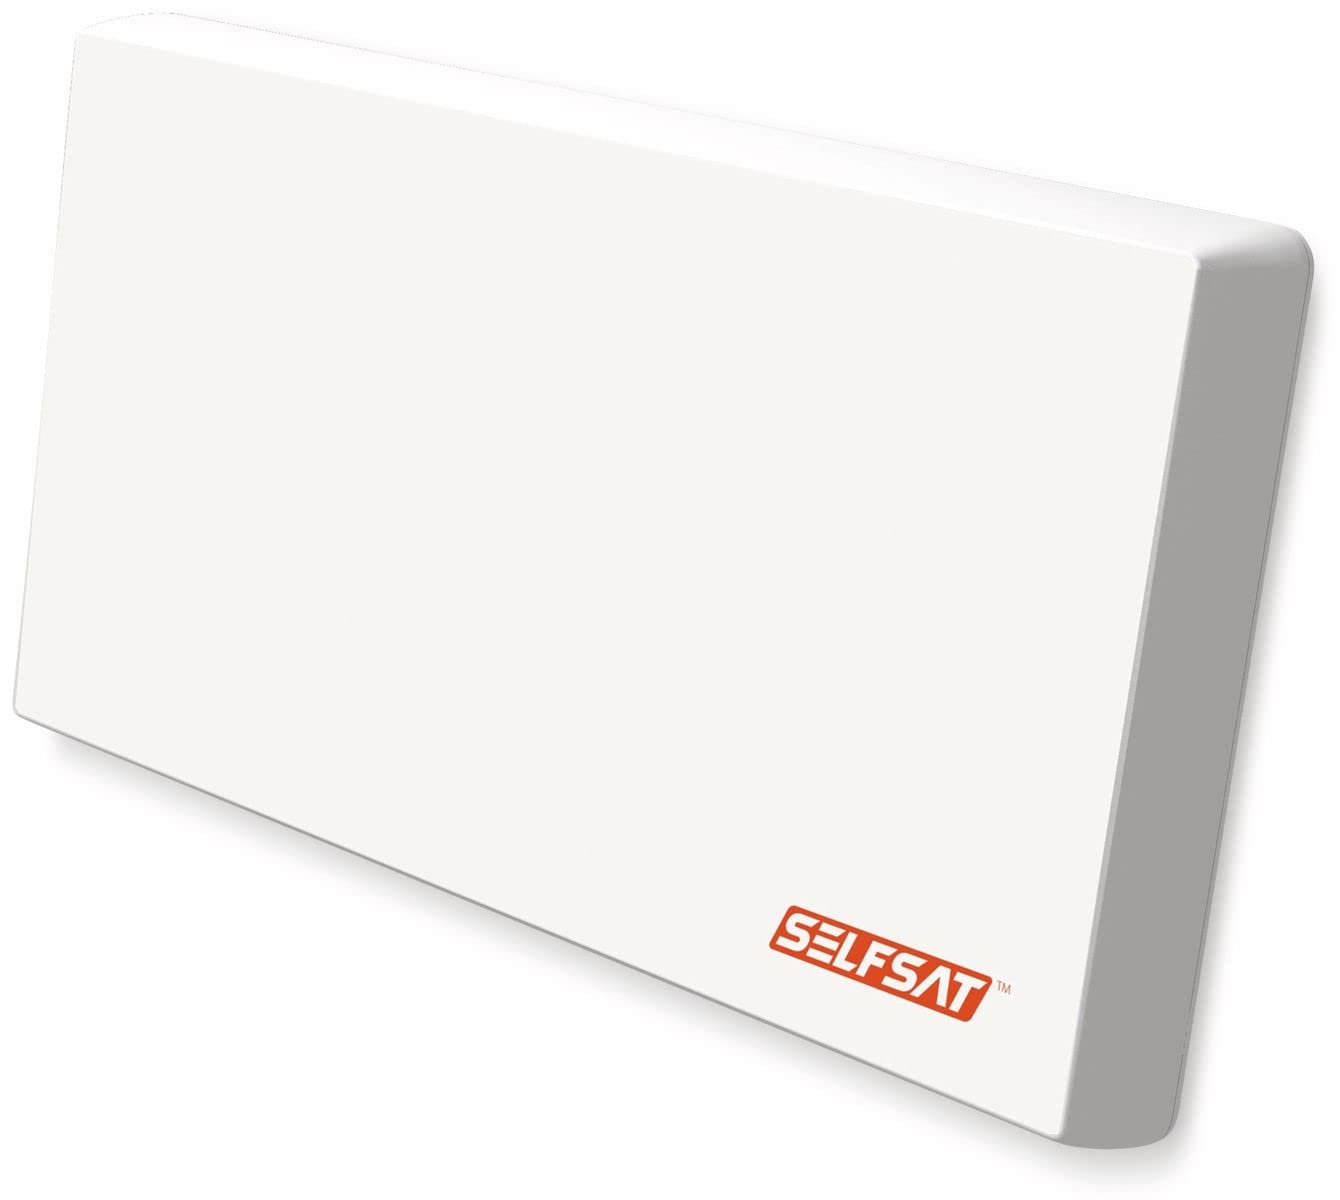 Selfsat H22D4 Flachantenne mit Austauschbaren Quad LNB Weiß